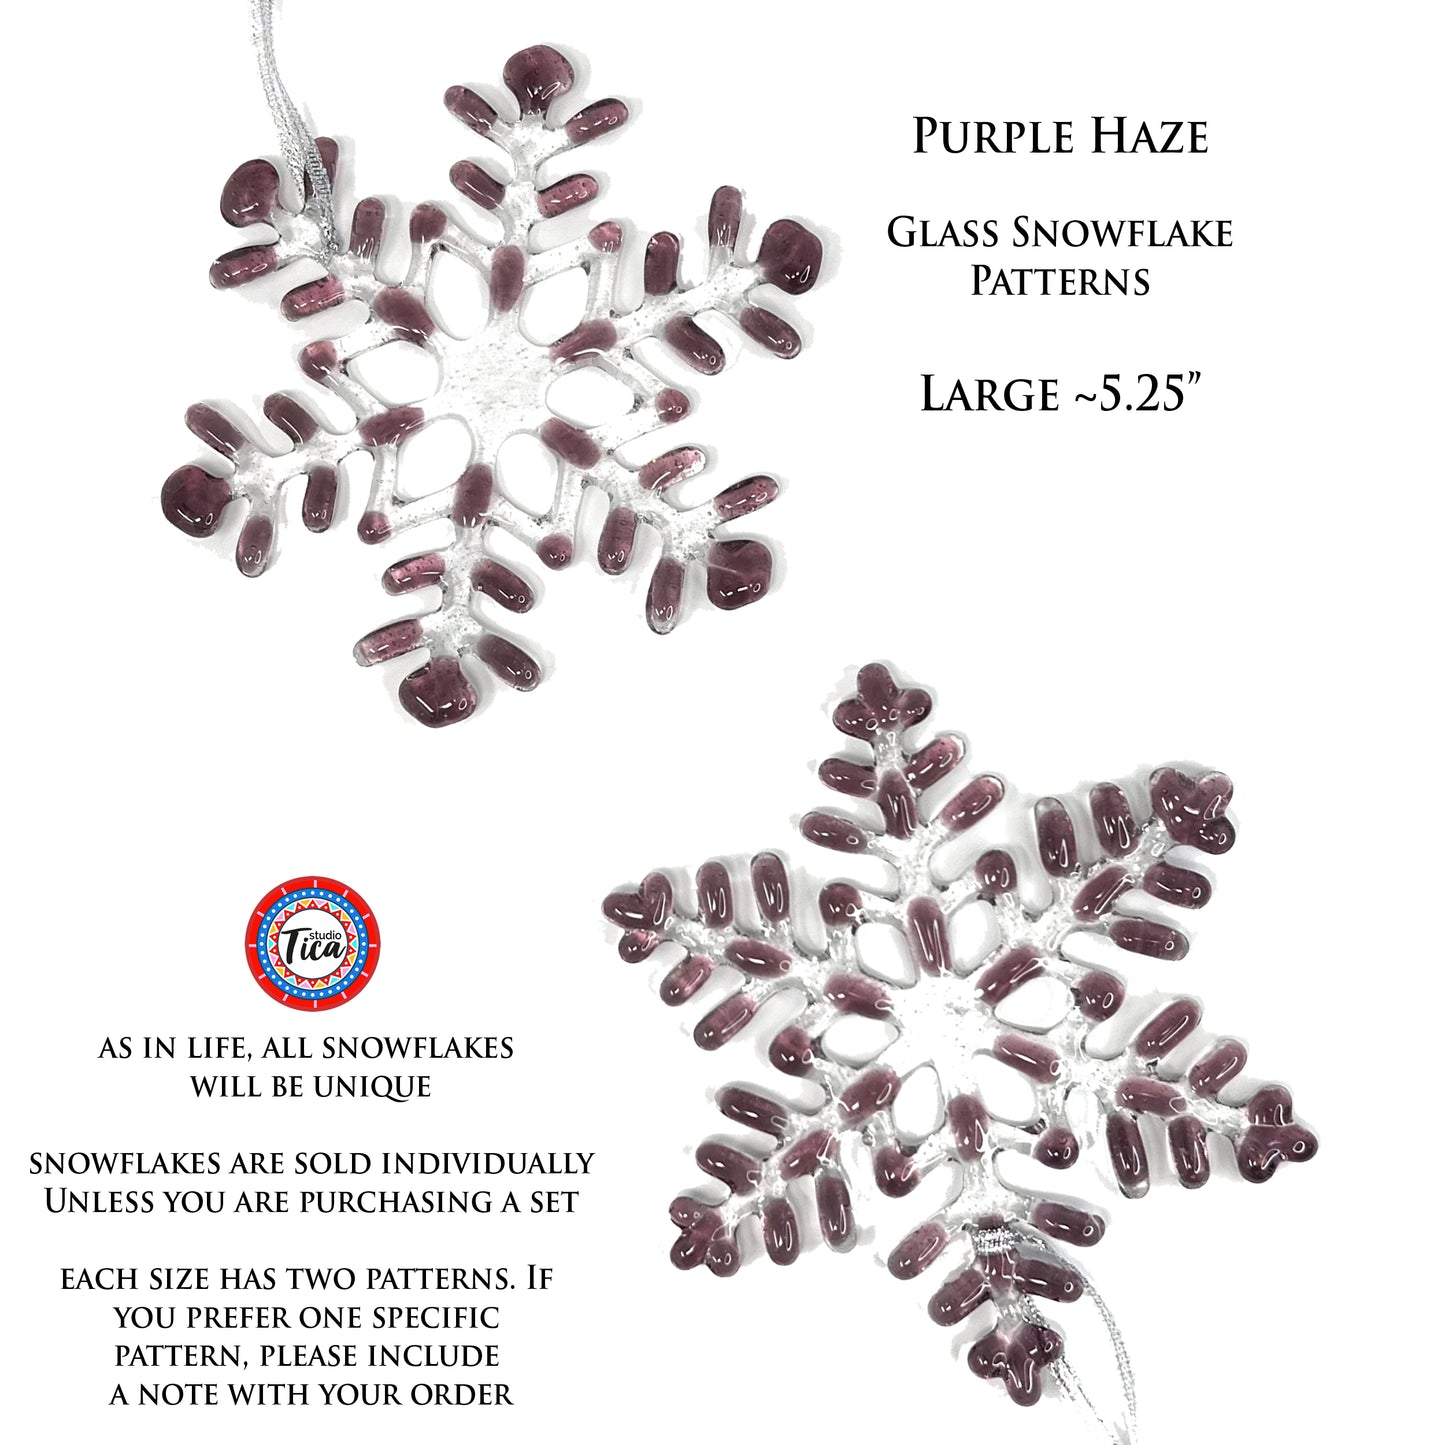 studioTica Purple Haze - Handmade Glass Snowflakes